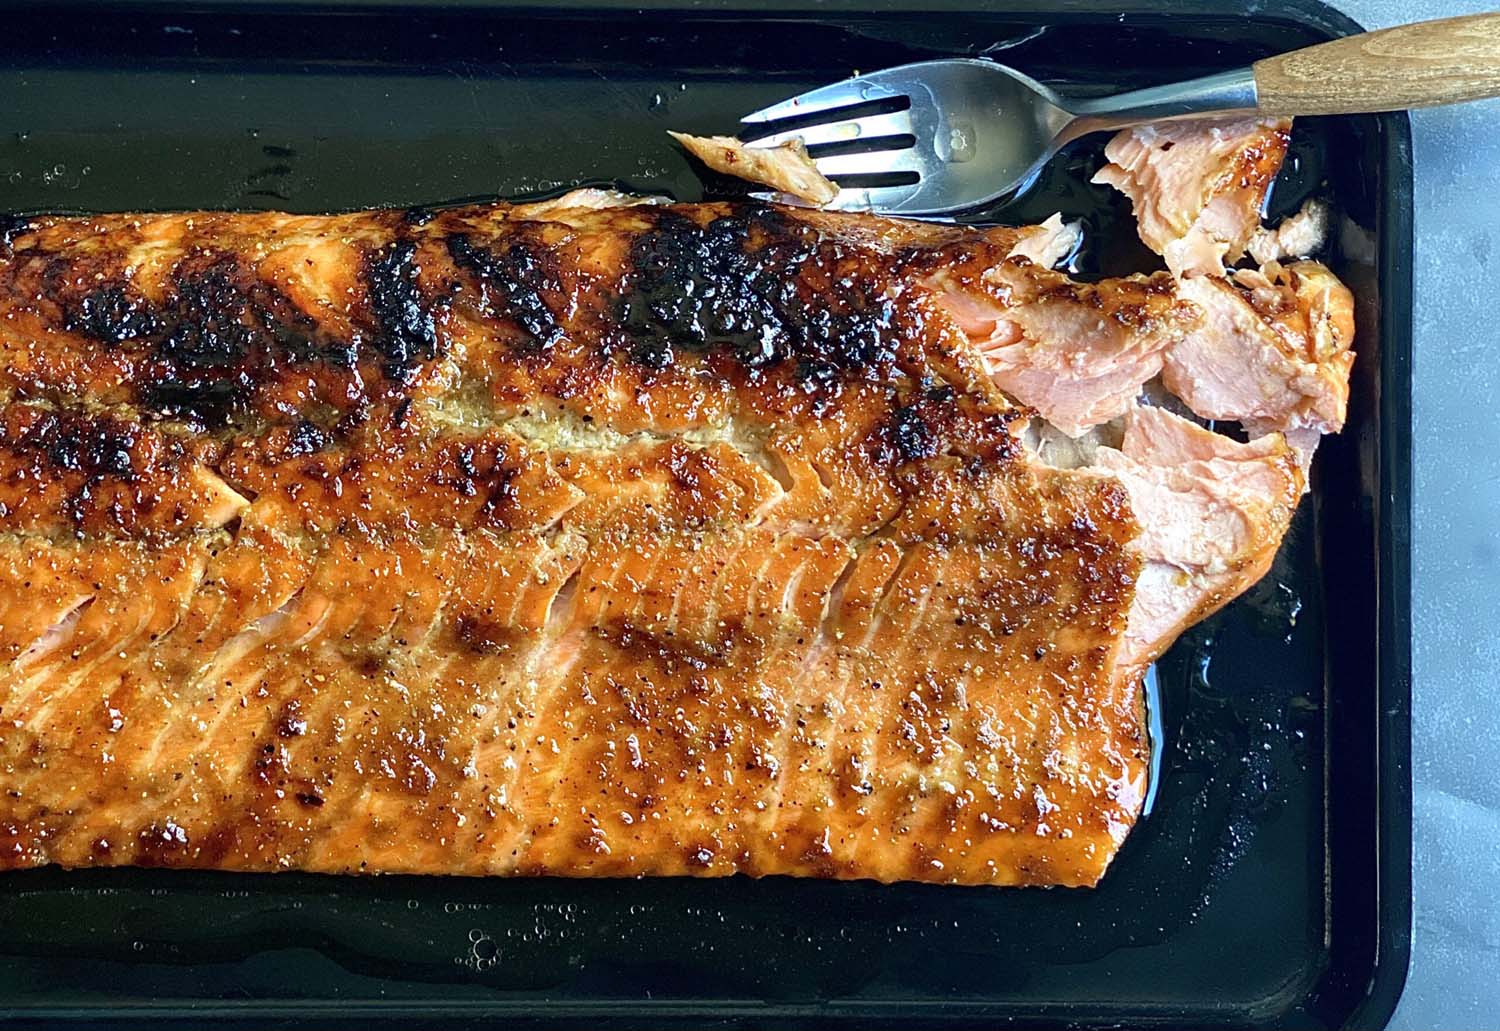 how-to-bake-or-broil-sockeye-salmon